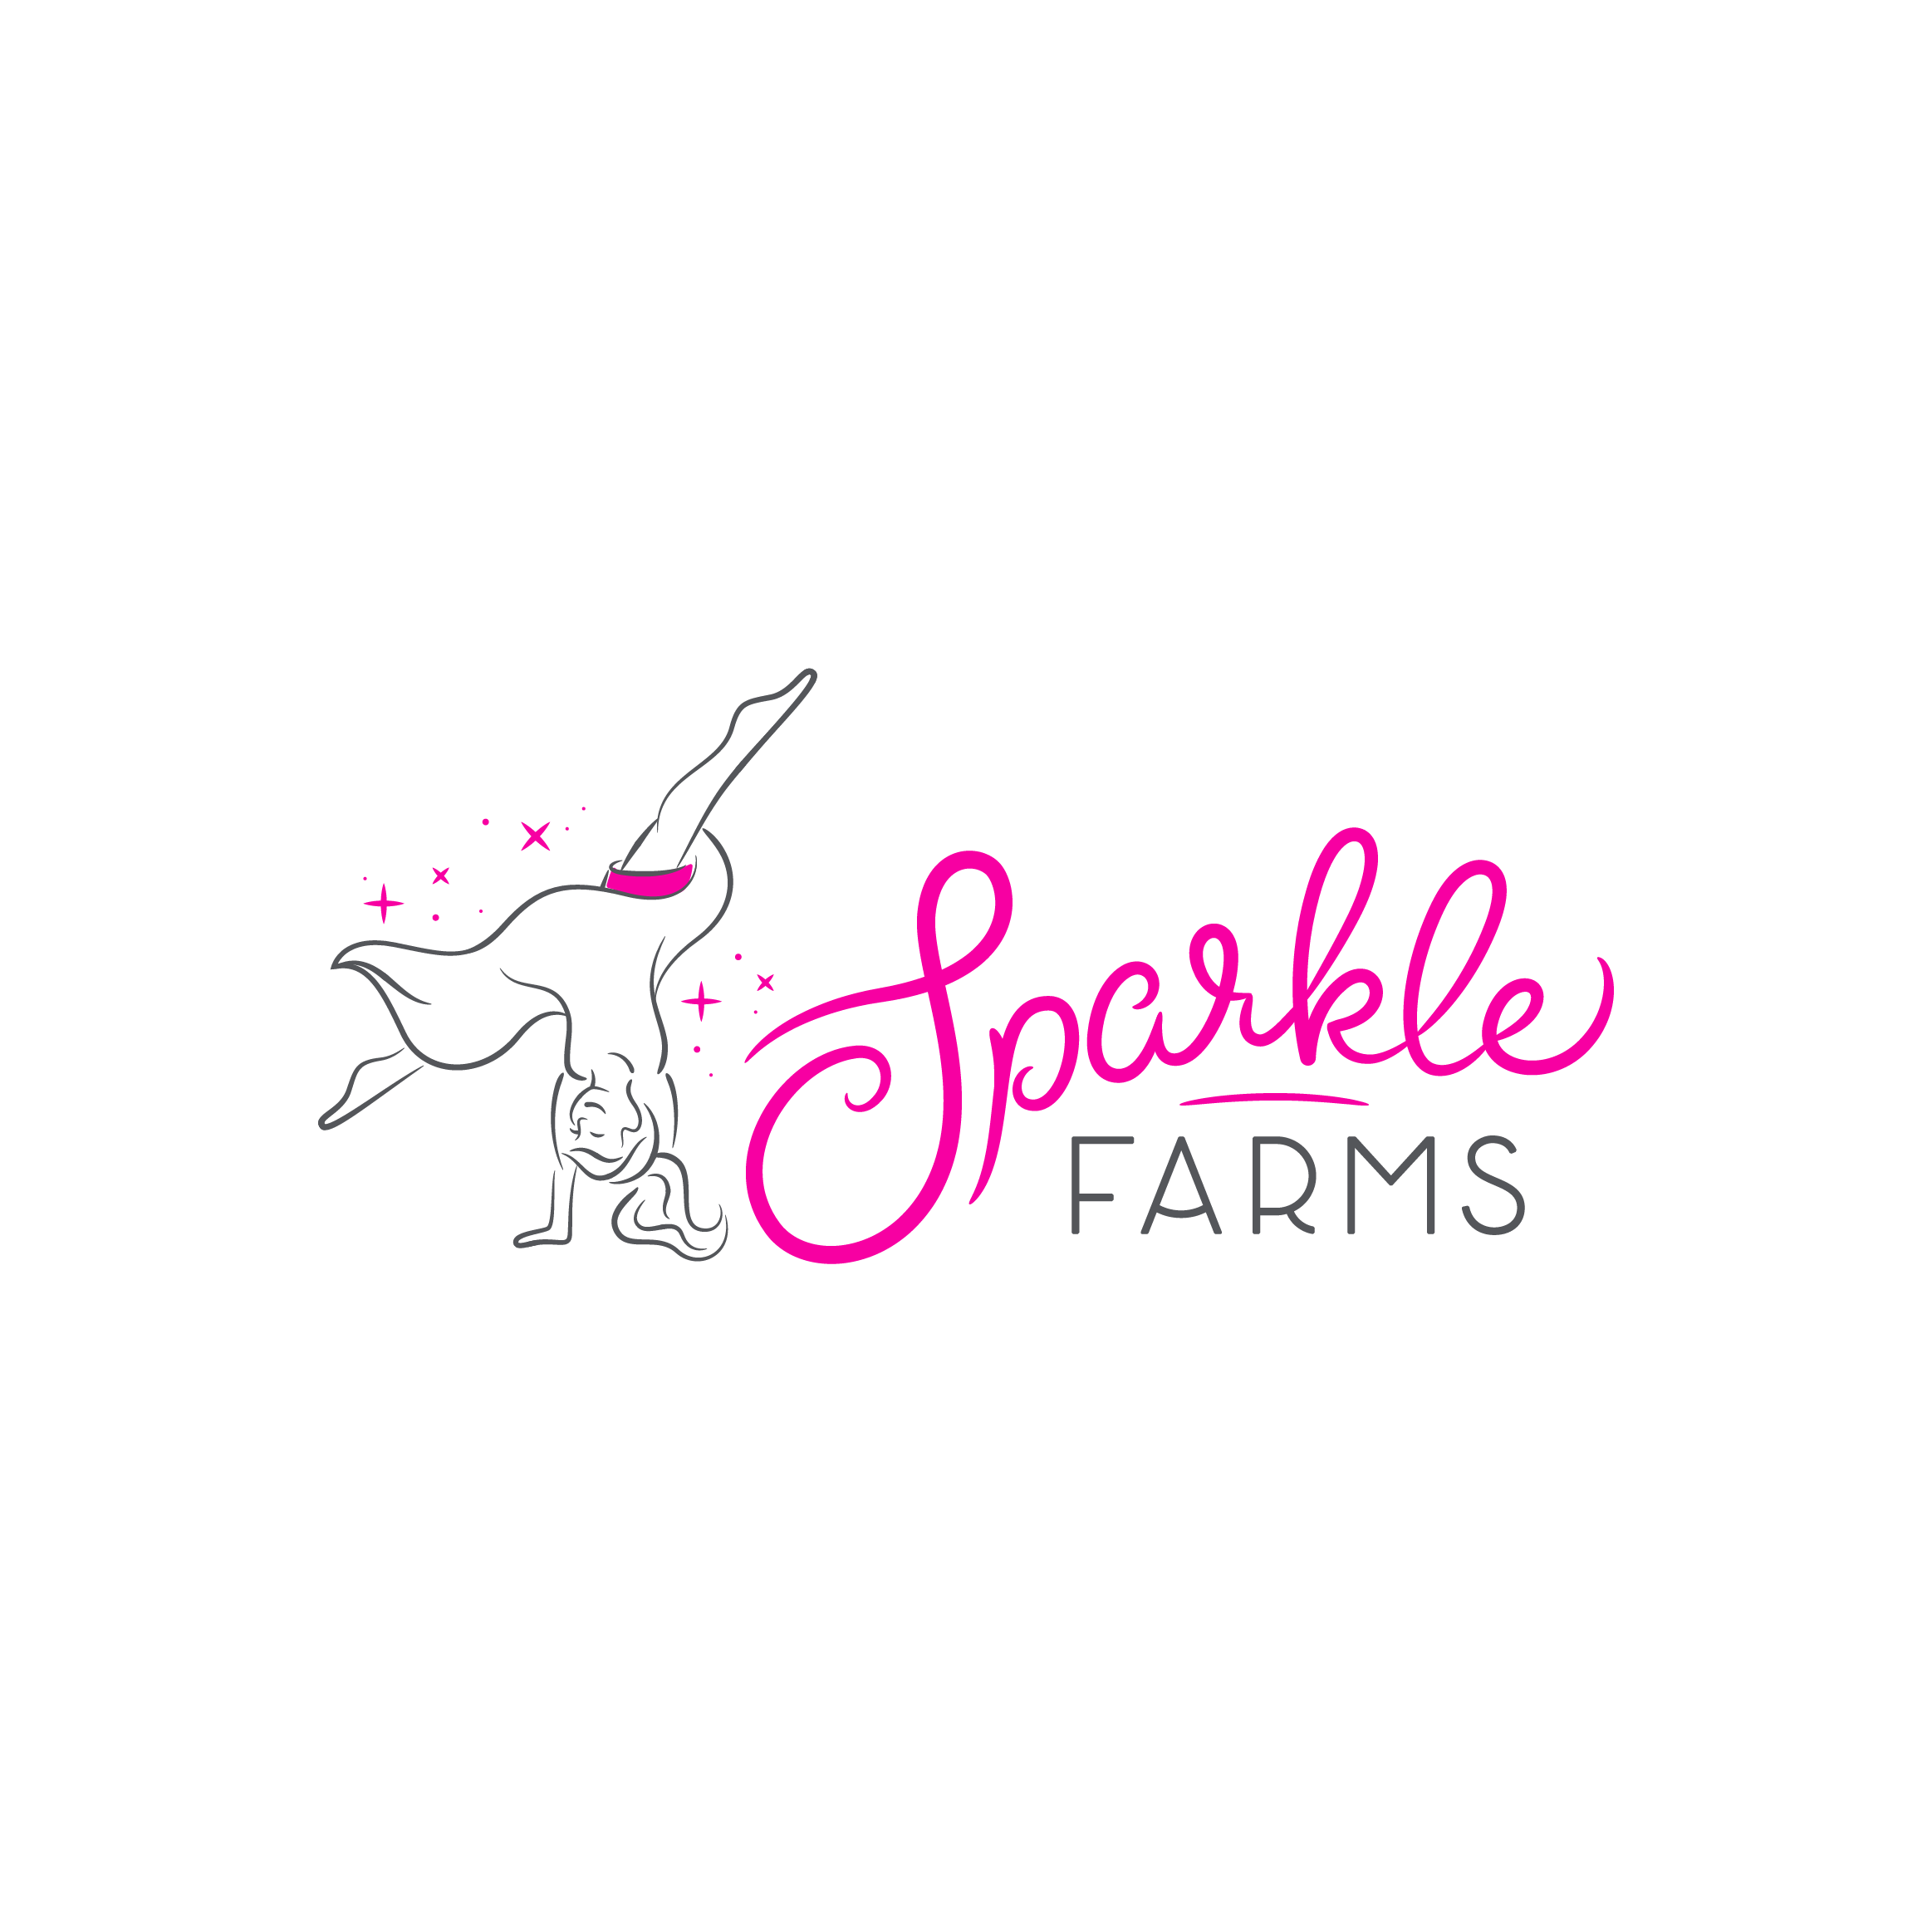 new sparkle farms logo